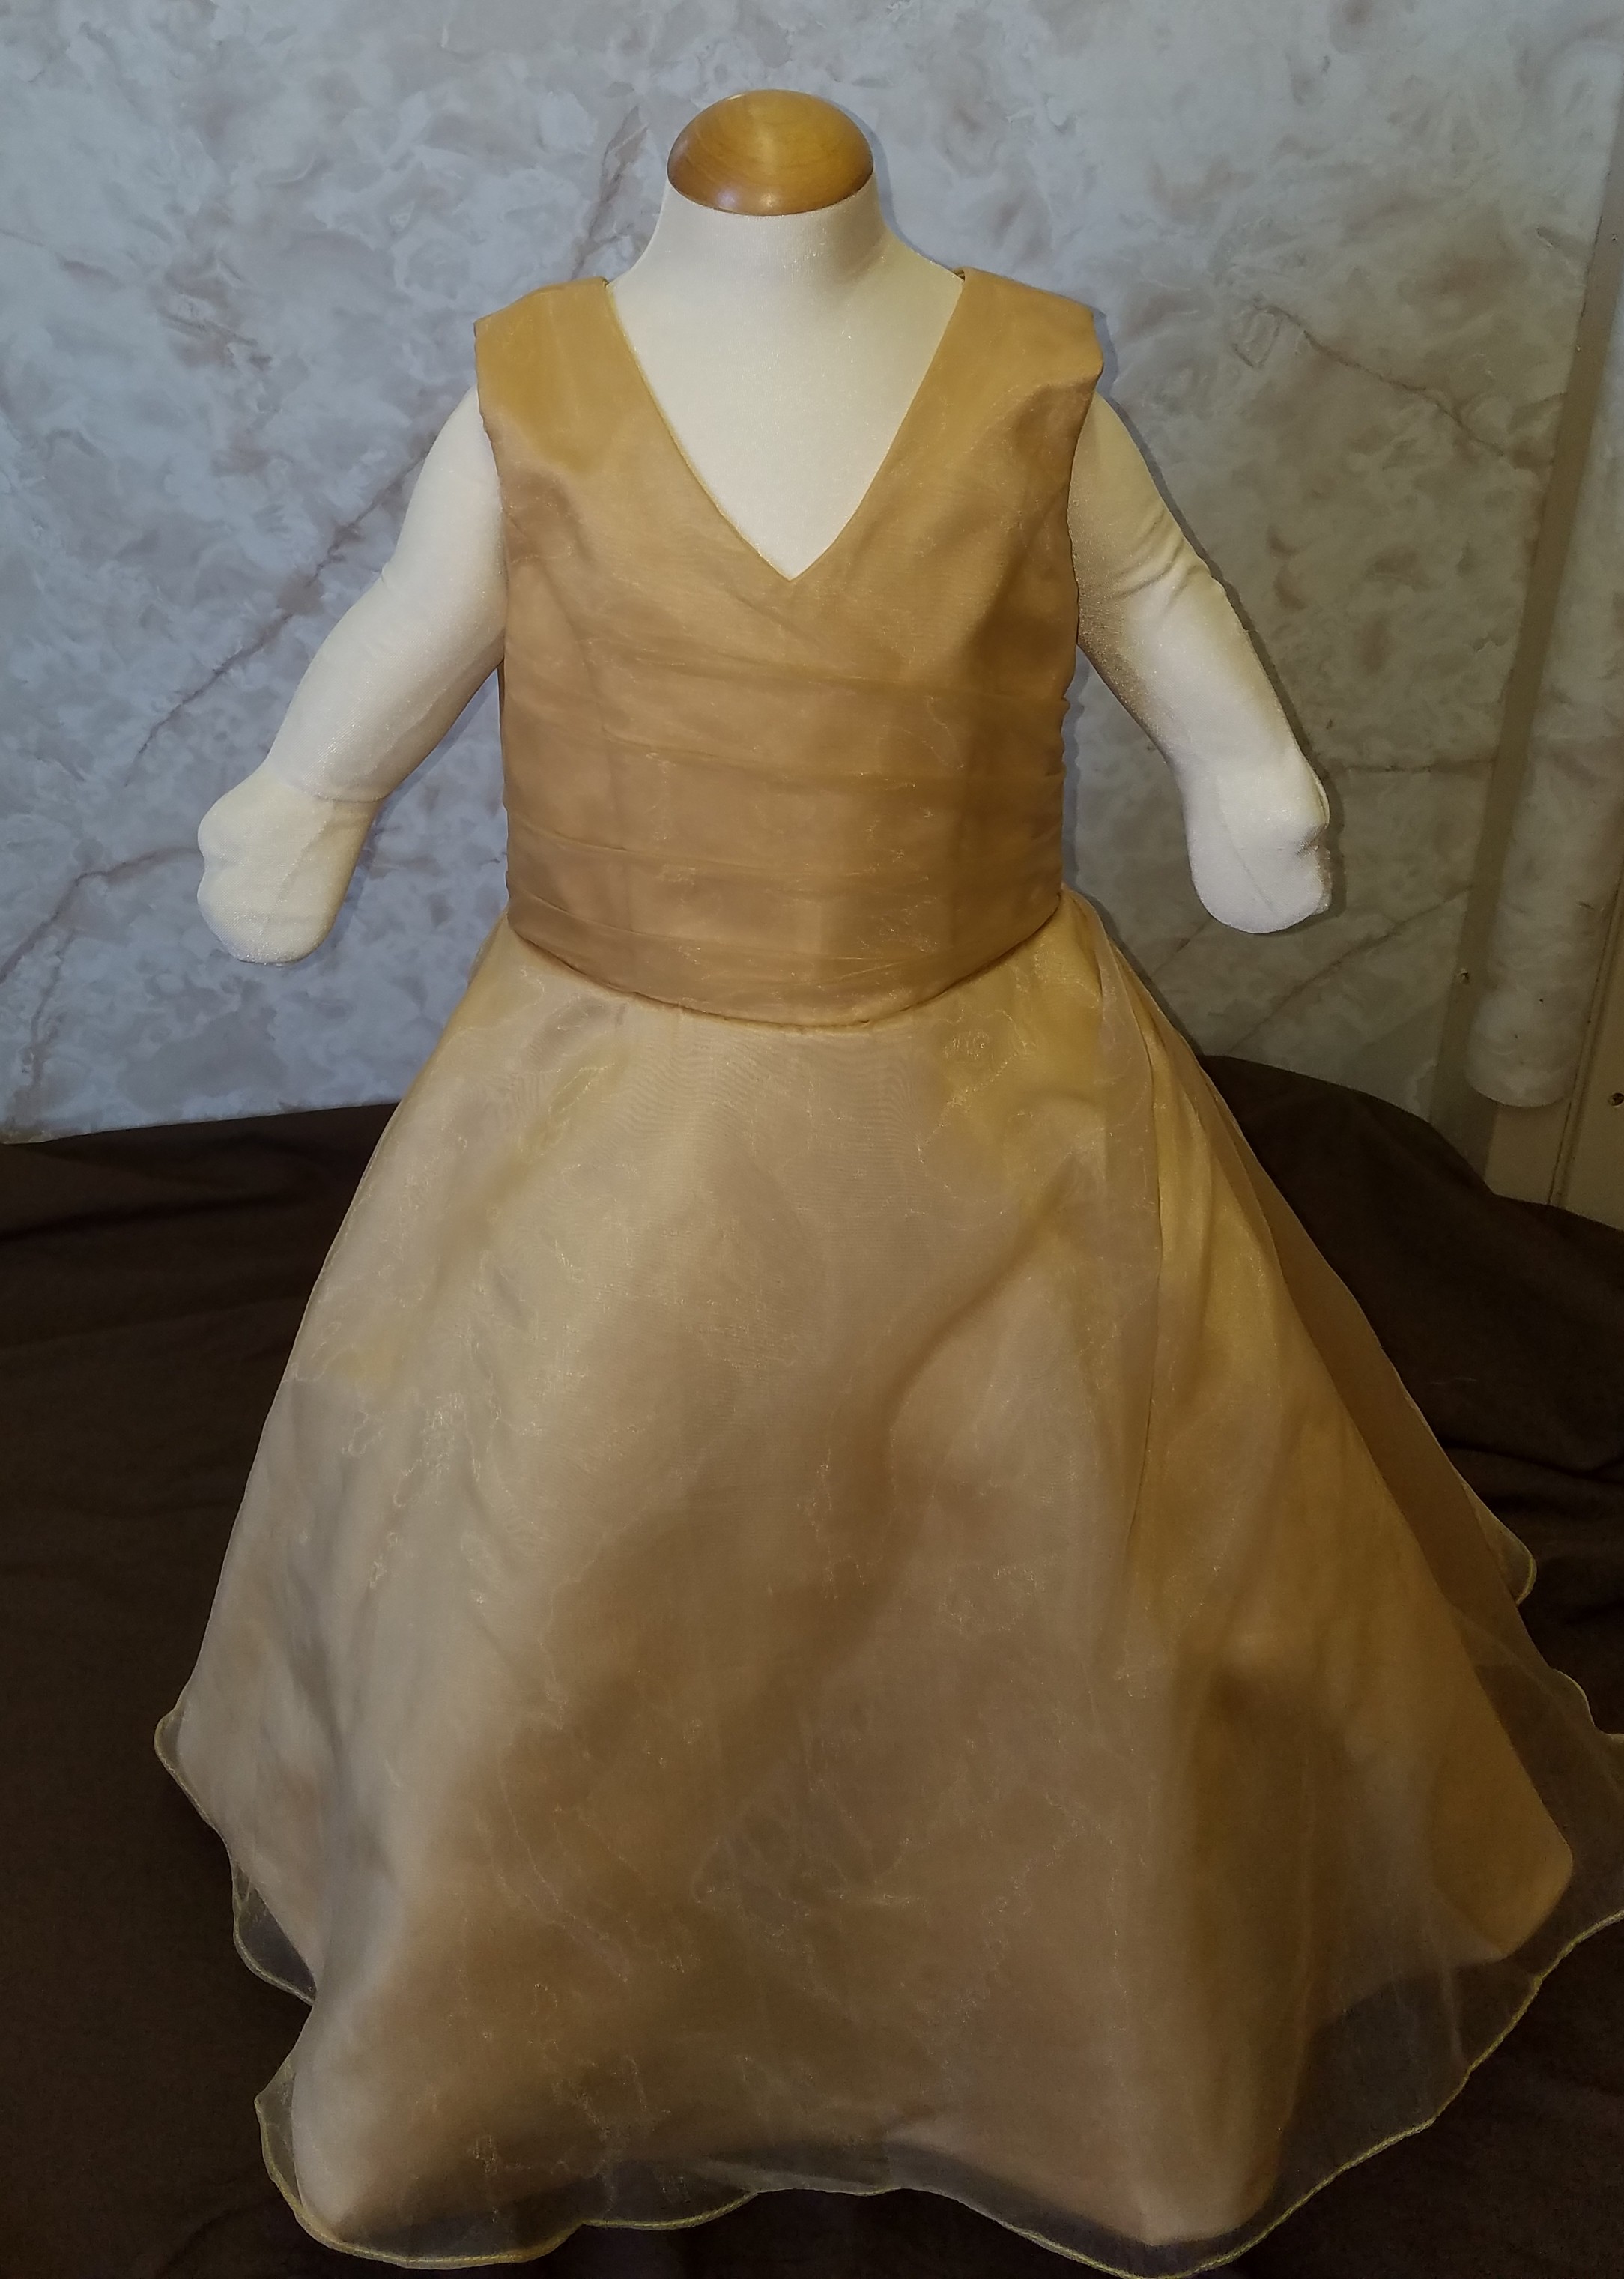 gold infant size dress